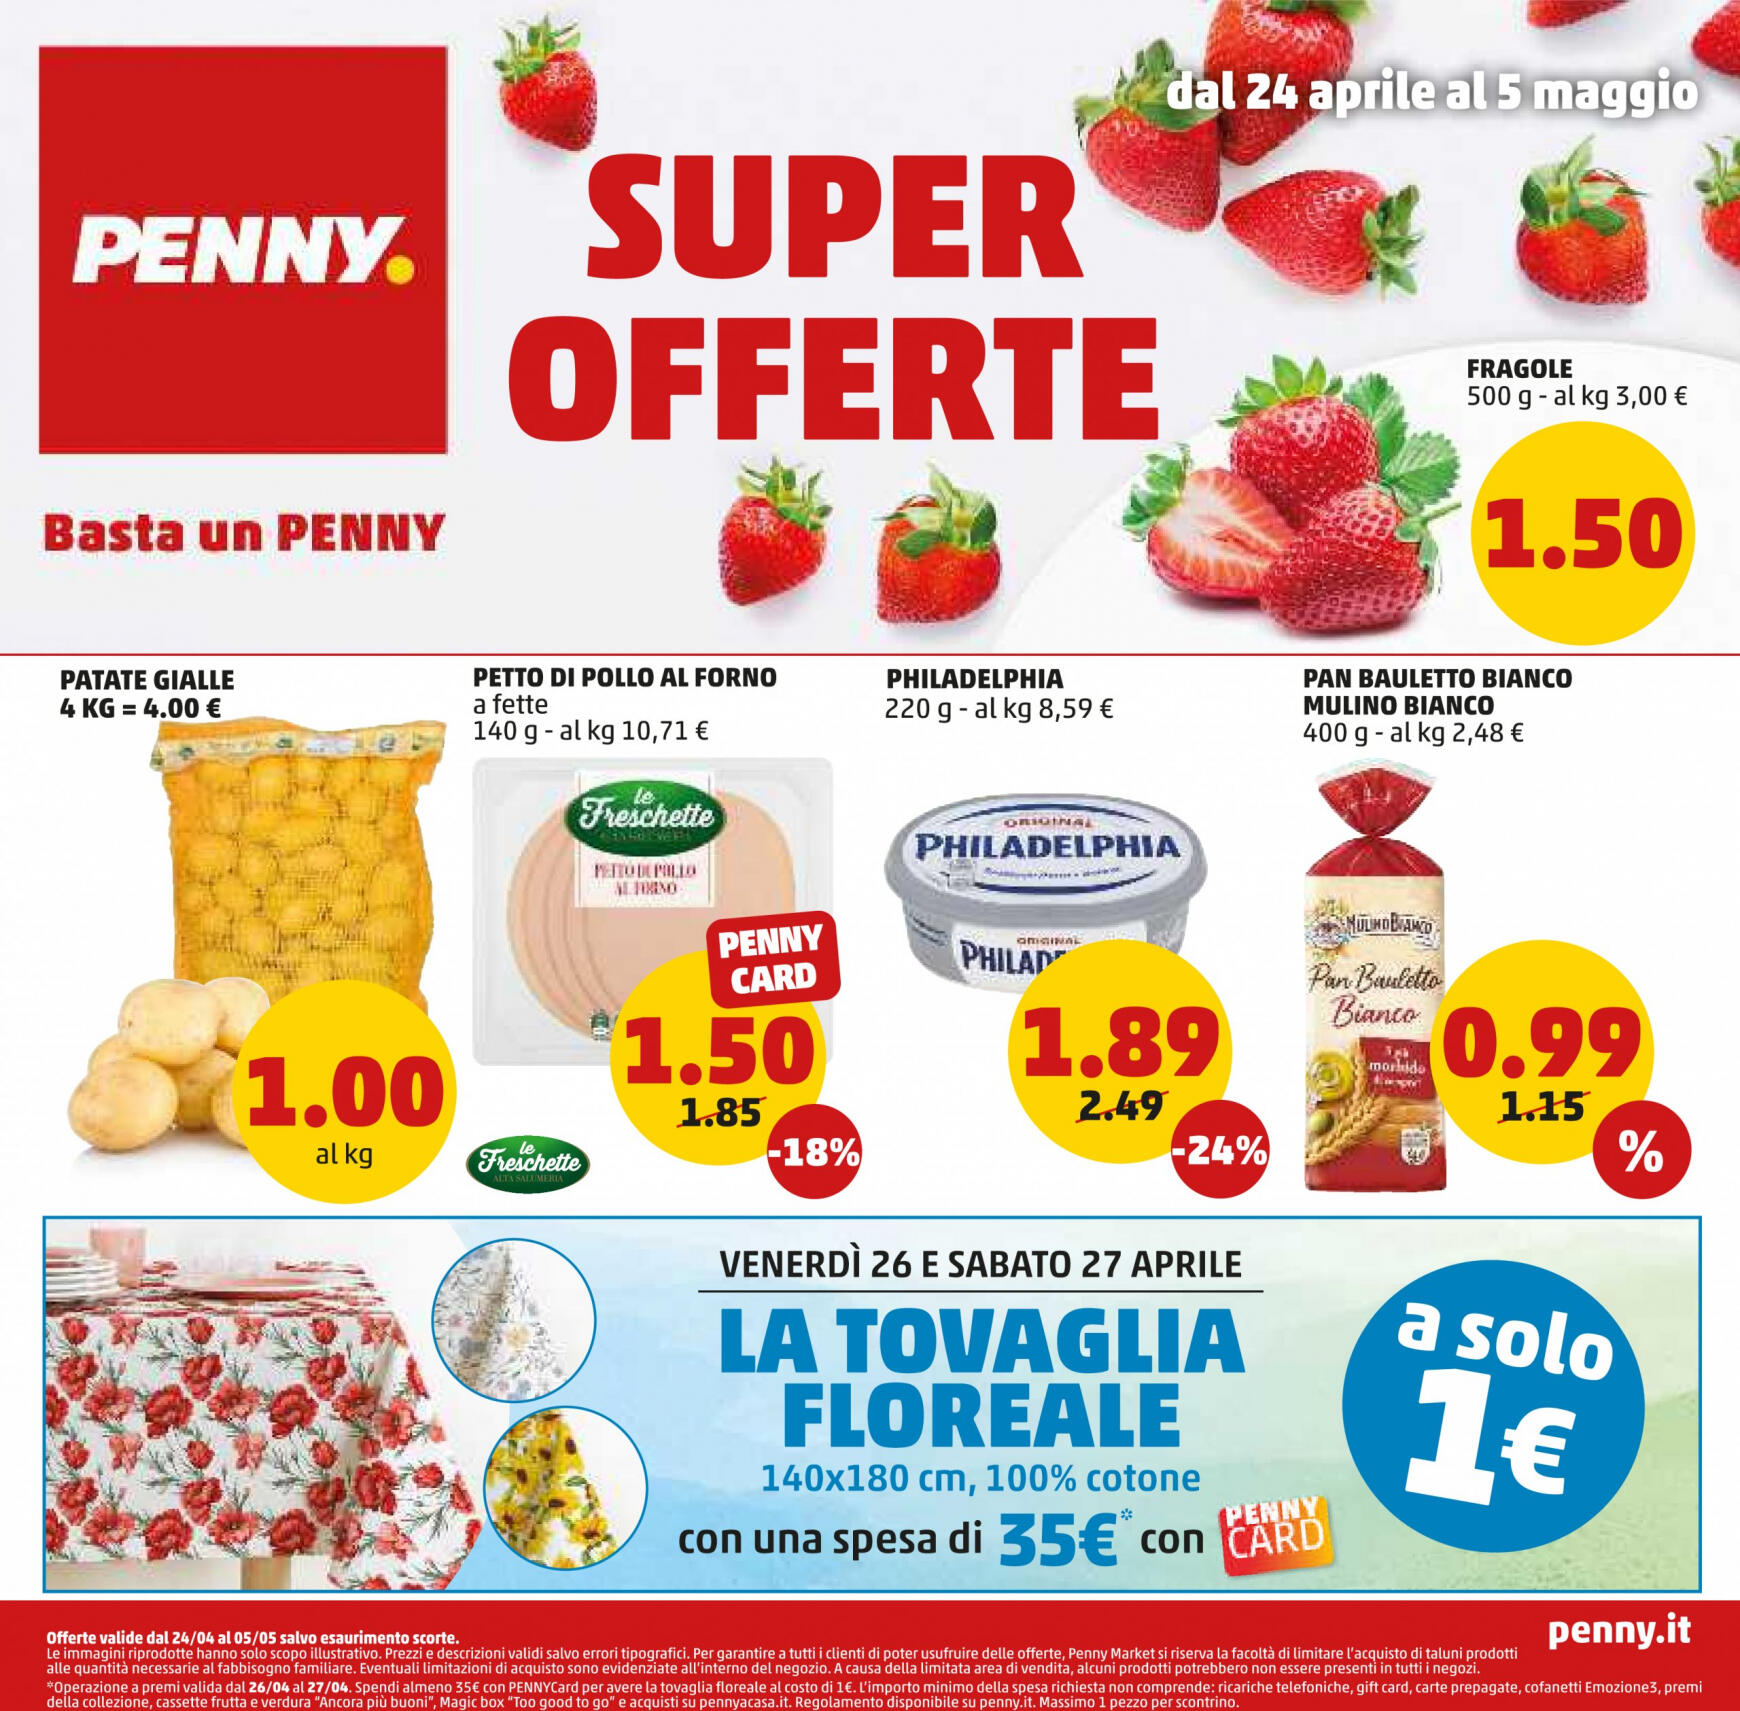 penny - Nuovo volantino PENNY 24.04. - 05.05. - page: 1